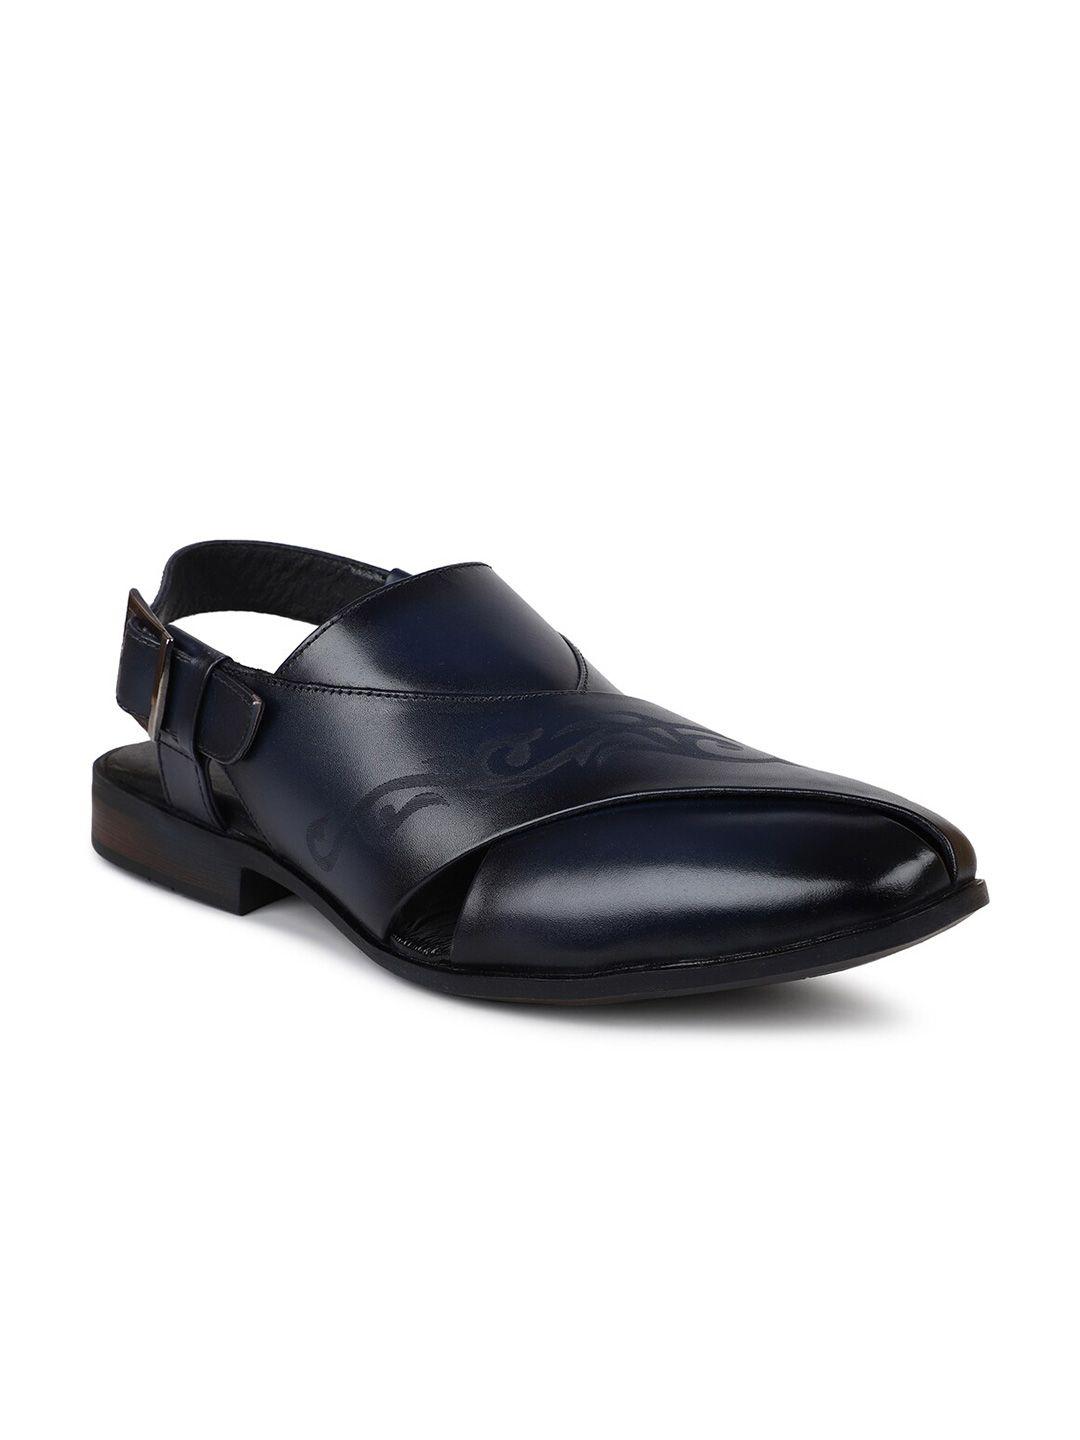 privo men navy blue self design leather close toe shoe style sandal